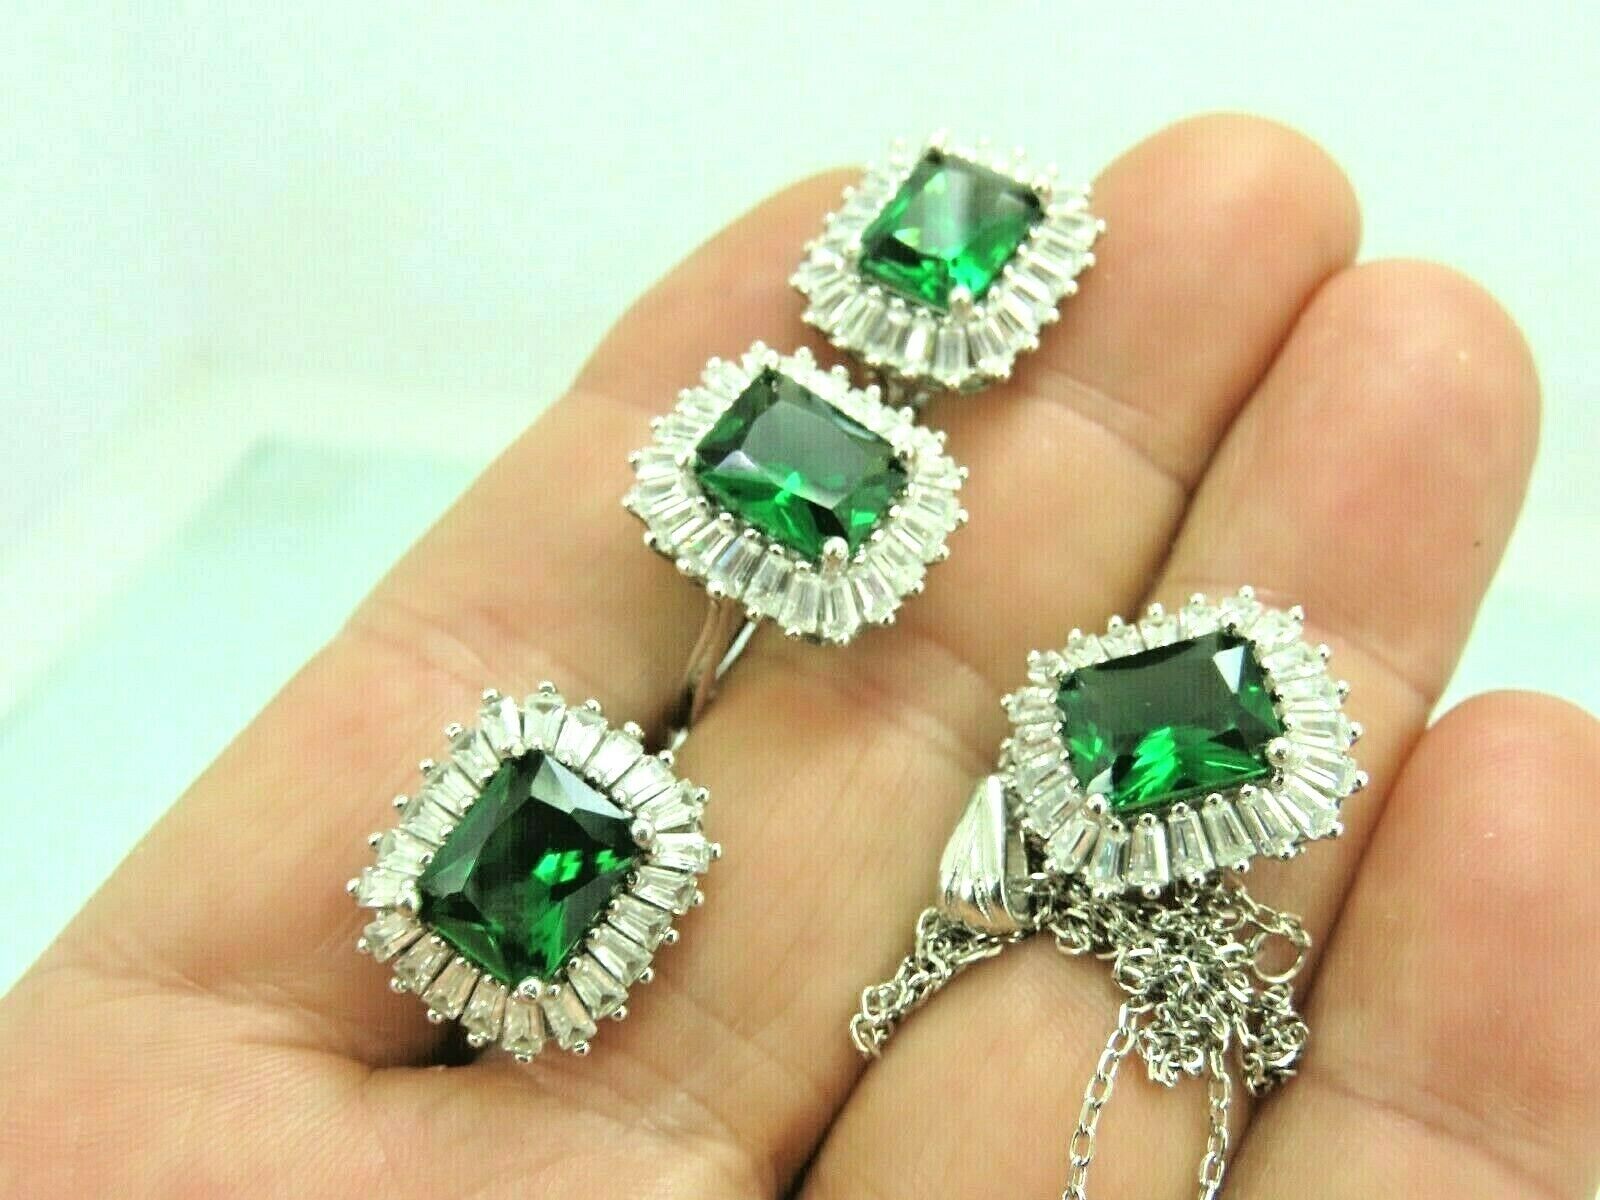 Silver 925 Armenian Jewelry Marcasite Emerald Green EARRINGS Very Long Green  Accessories Tudor Victorian 